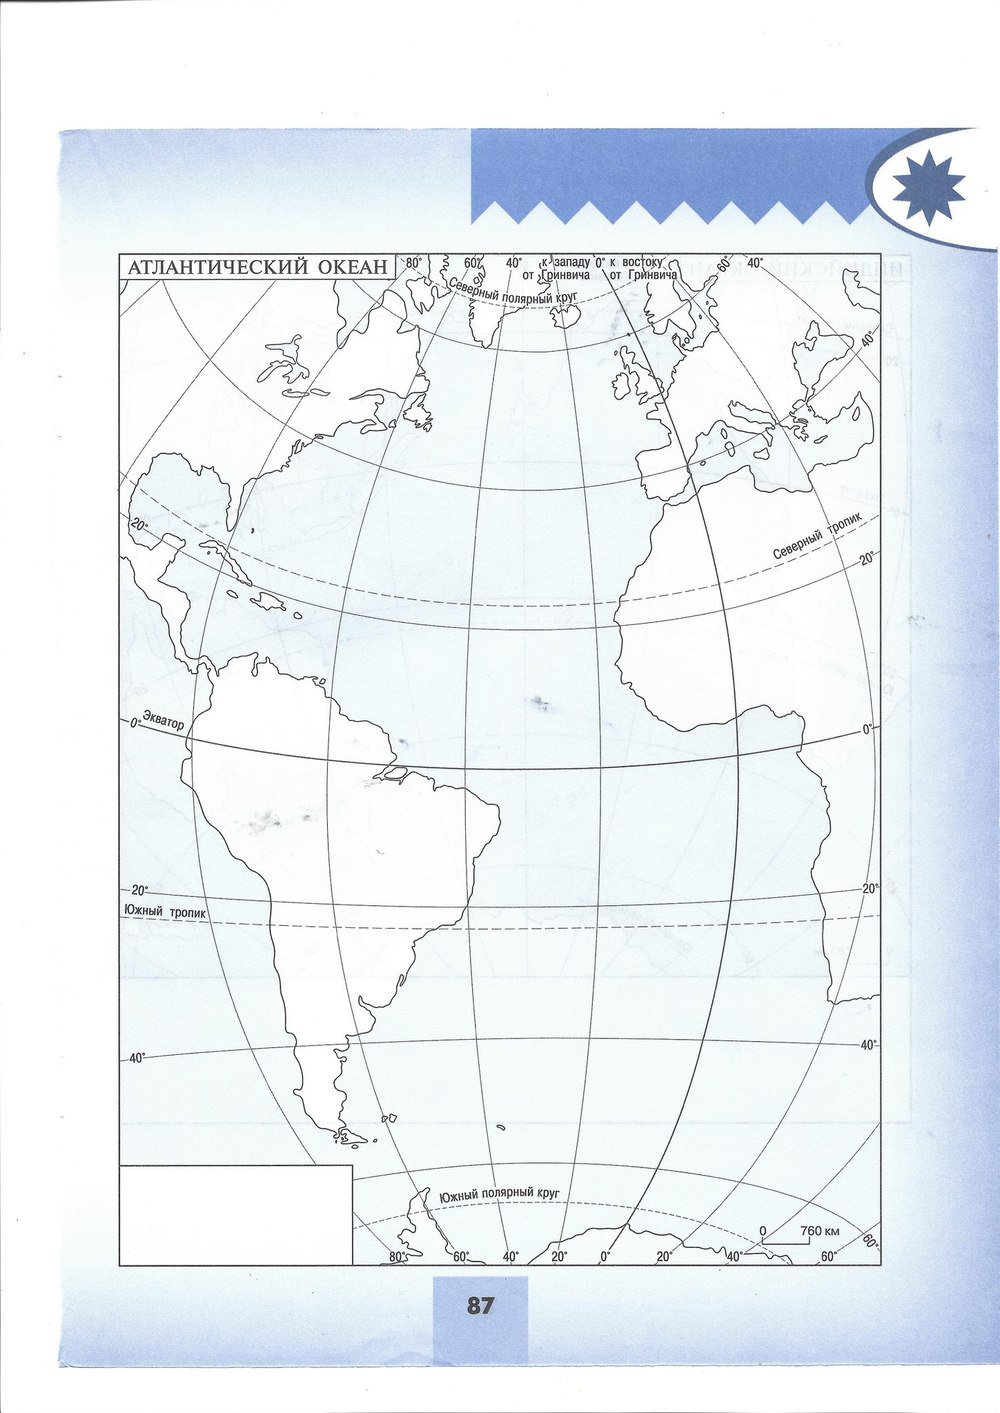 Контурная карта 7 класс стр 24 25. Контурная карта по географии 7 класс Атлантический океан. Контур карта география 7 класс Атлантический океан. Атлантический океан 7 класс география контурная карта. Контурная карта Атлантического океана.